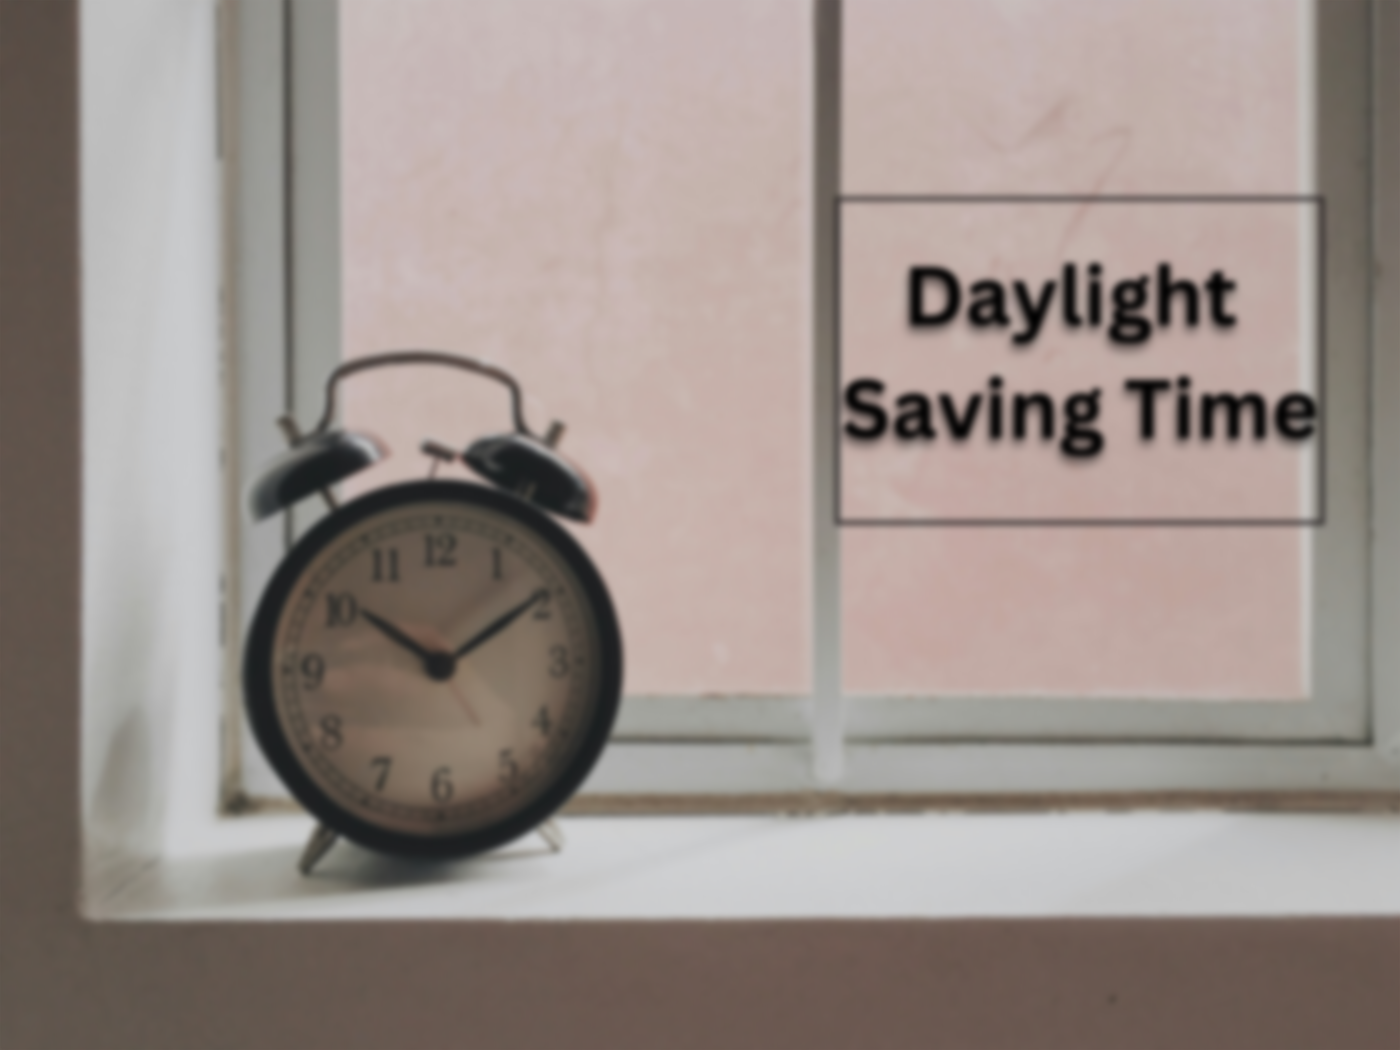 Daylight Saving Time Starts